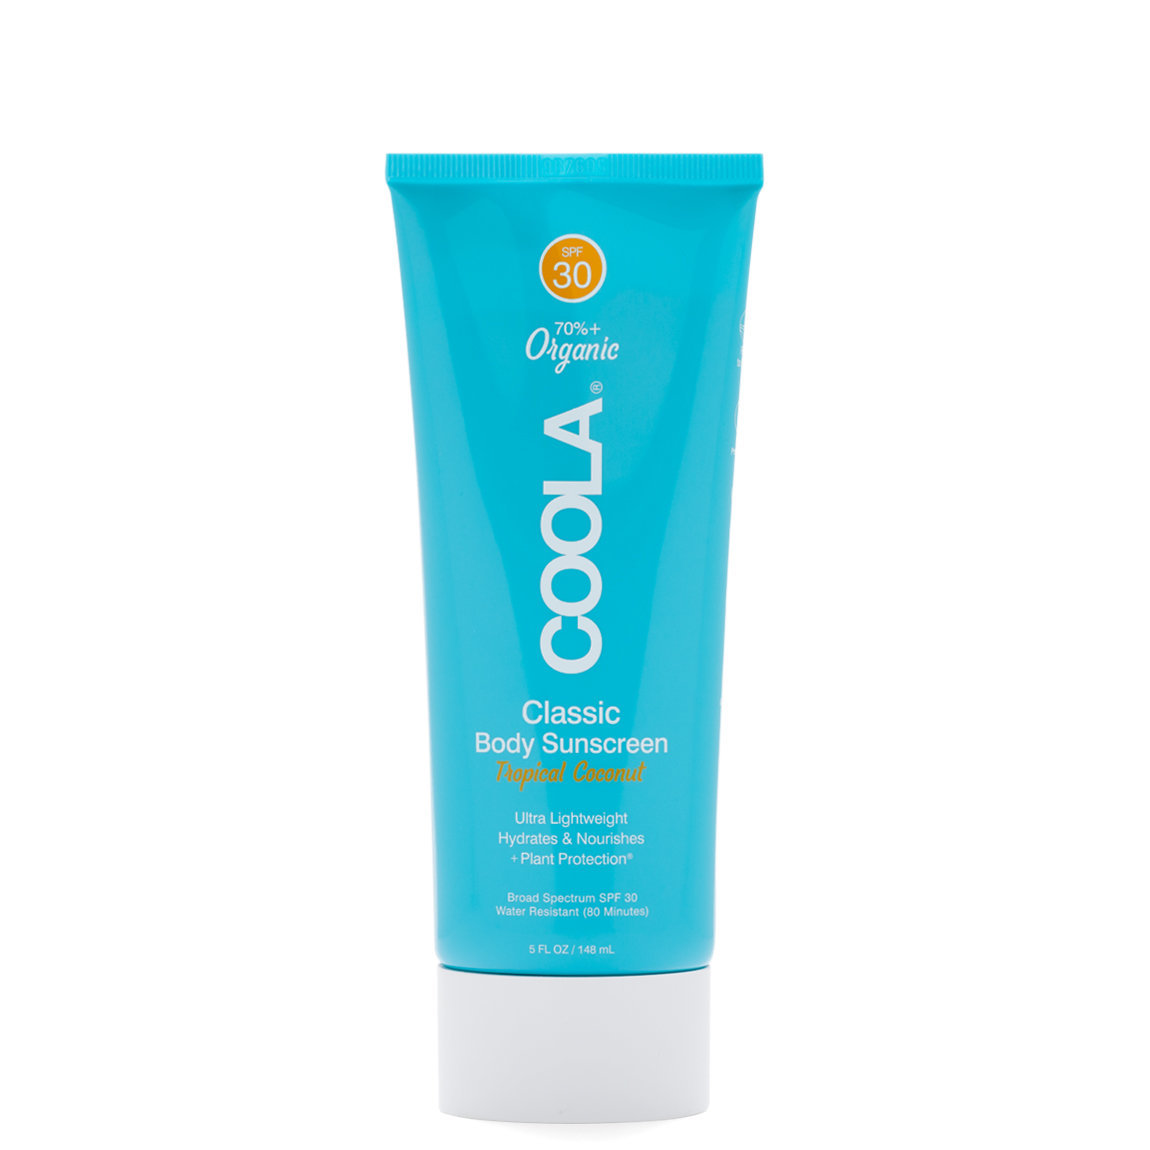 coola classic body organic sunscreen spray spf 70